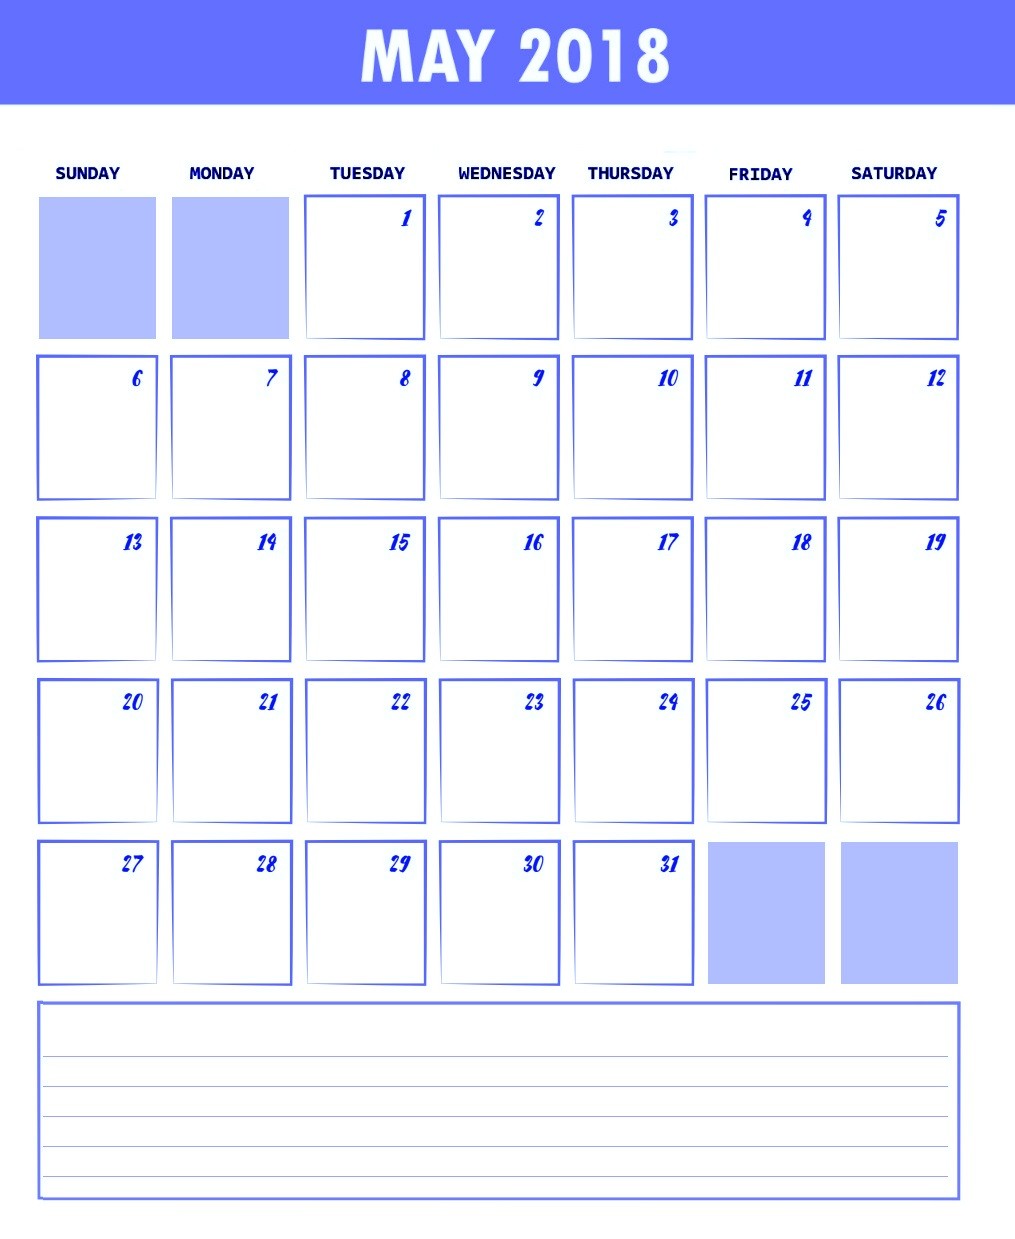 waterproof calendar january 2021 Unique Waterproof Printable Calendar Free Printable Calendar Monthly waterproof calendar january 2021